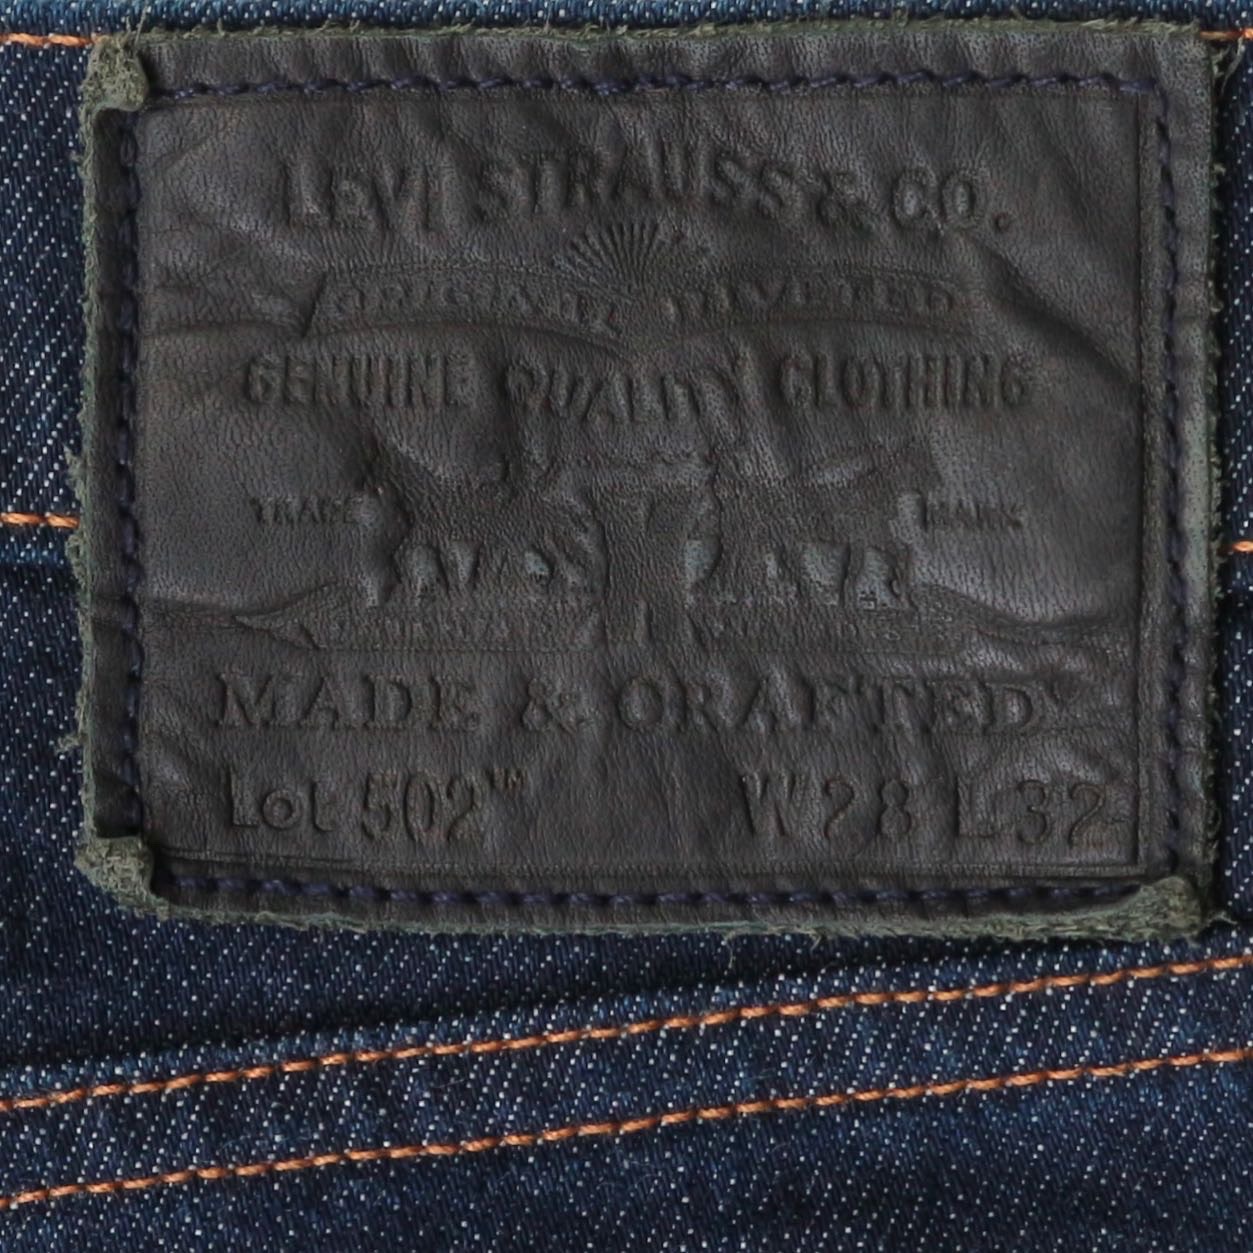 Levi's Made & Crafted Selvedge Denim Jeans Size 28 denimister